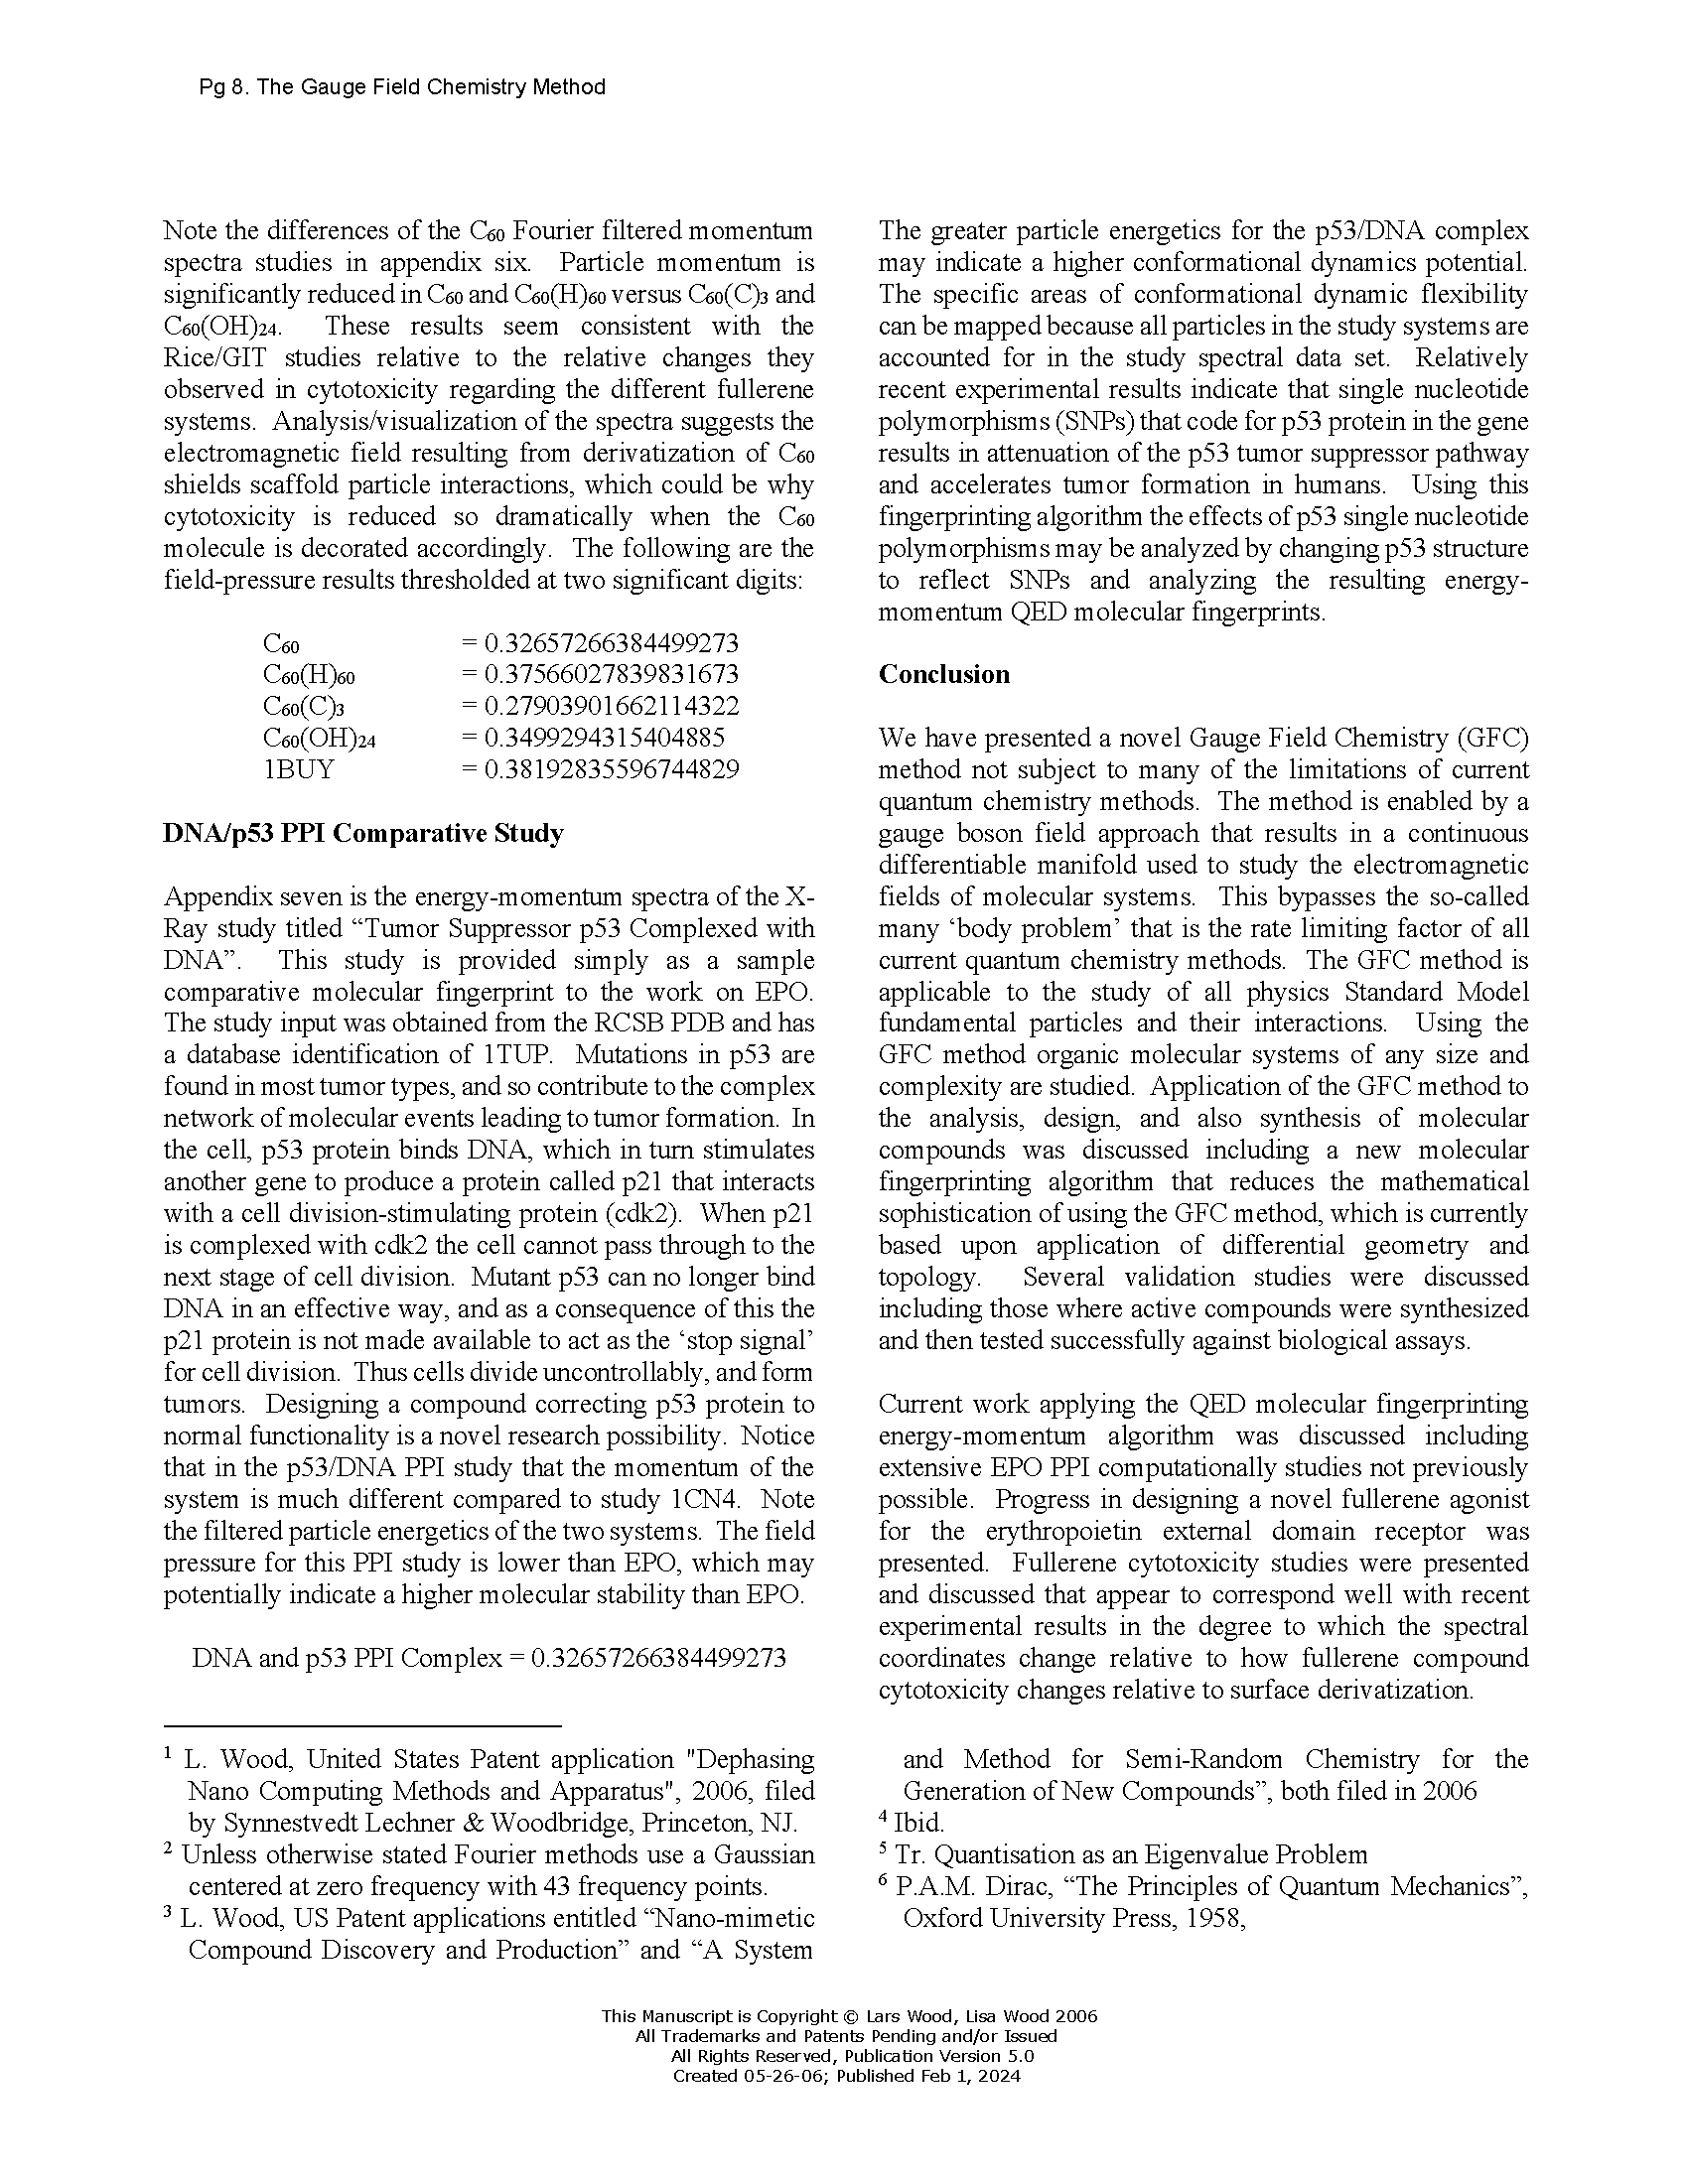 The Gauge Field Chemistry Method V5 Published_Page_08.png